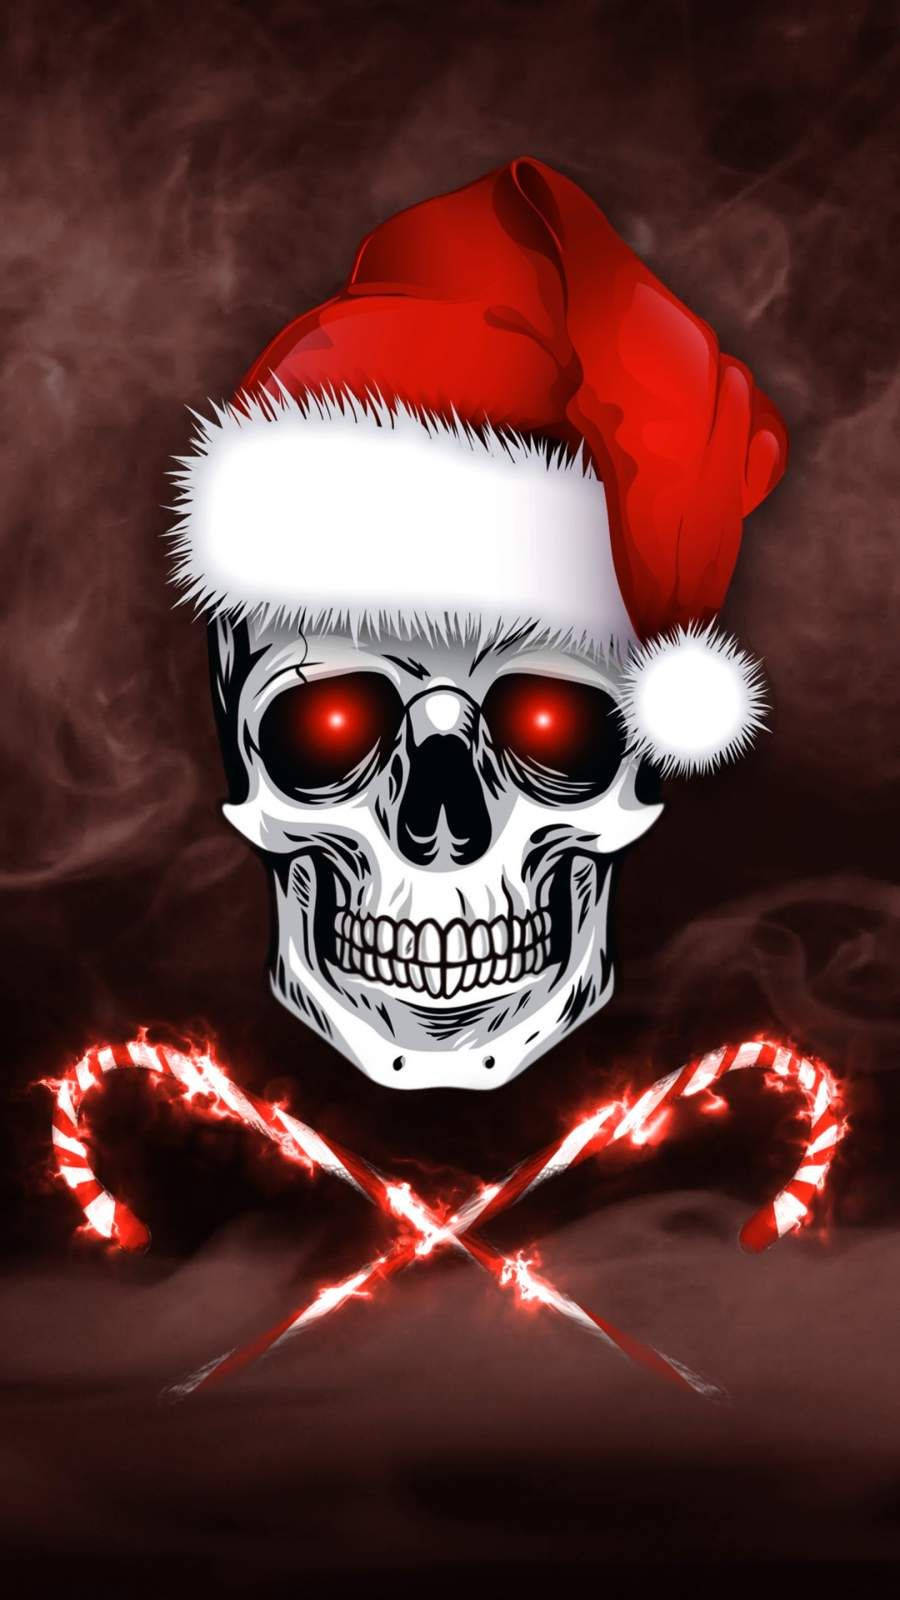 “Et kølig gothisk jul” Wallpaper